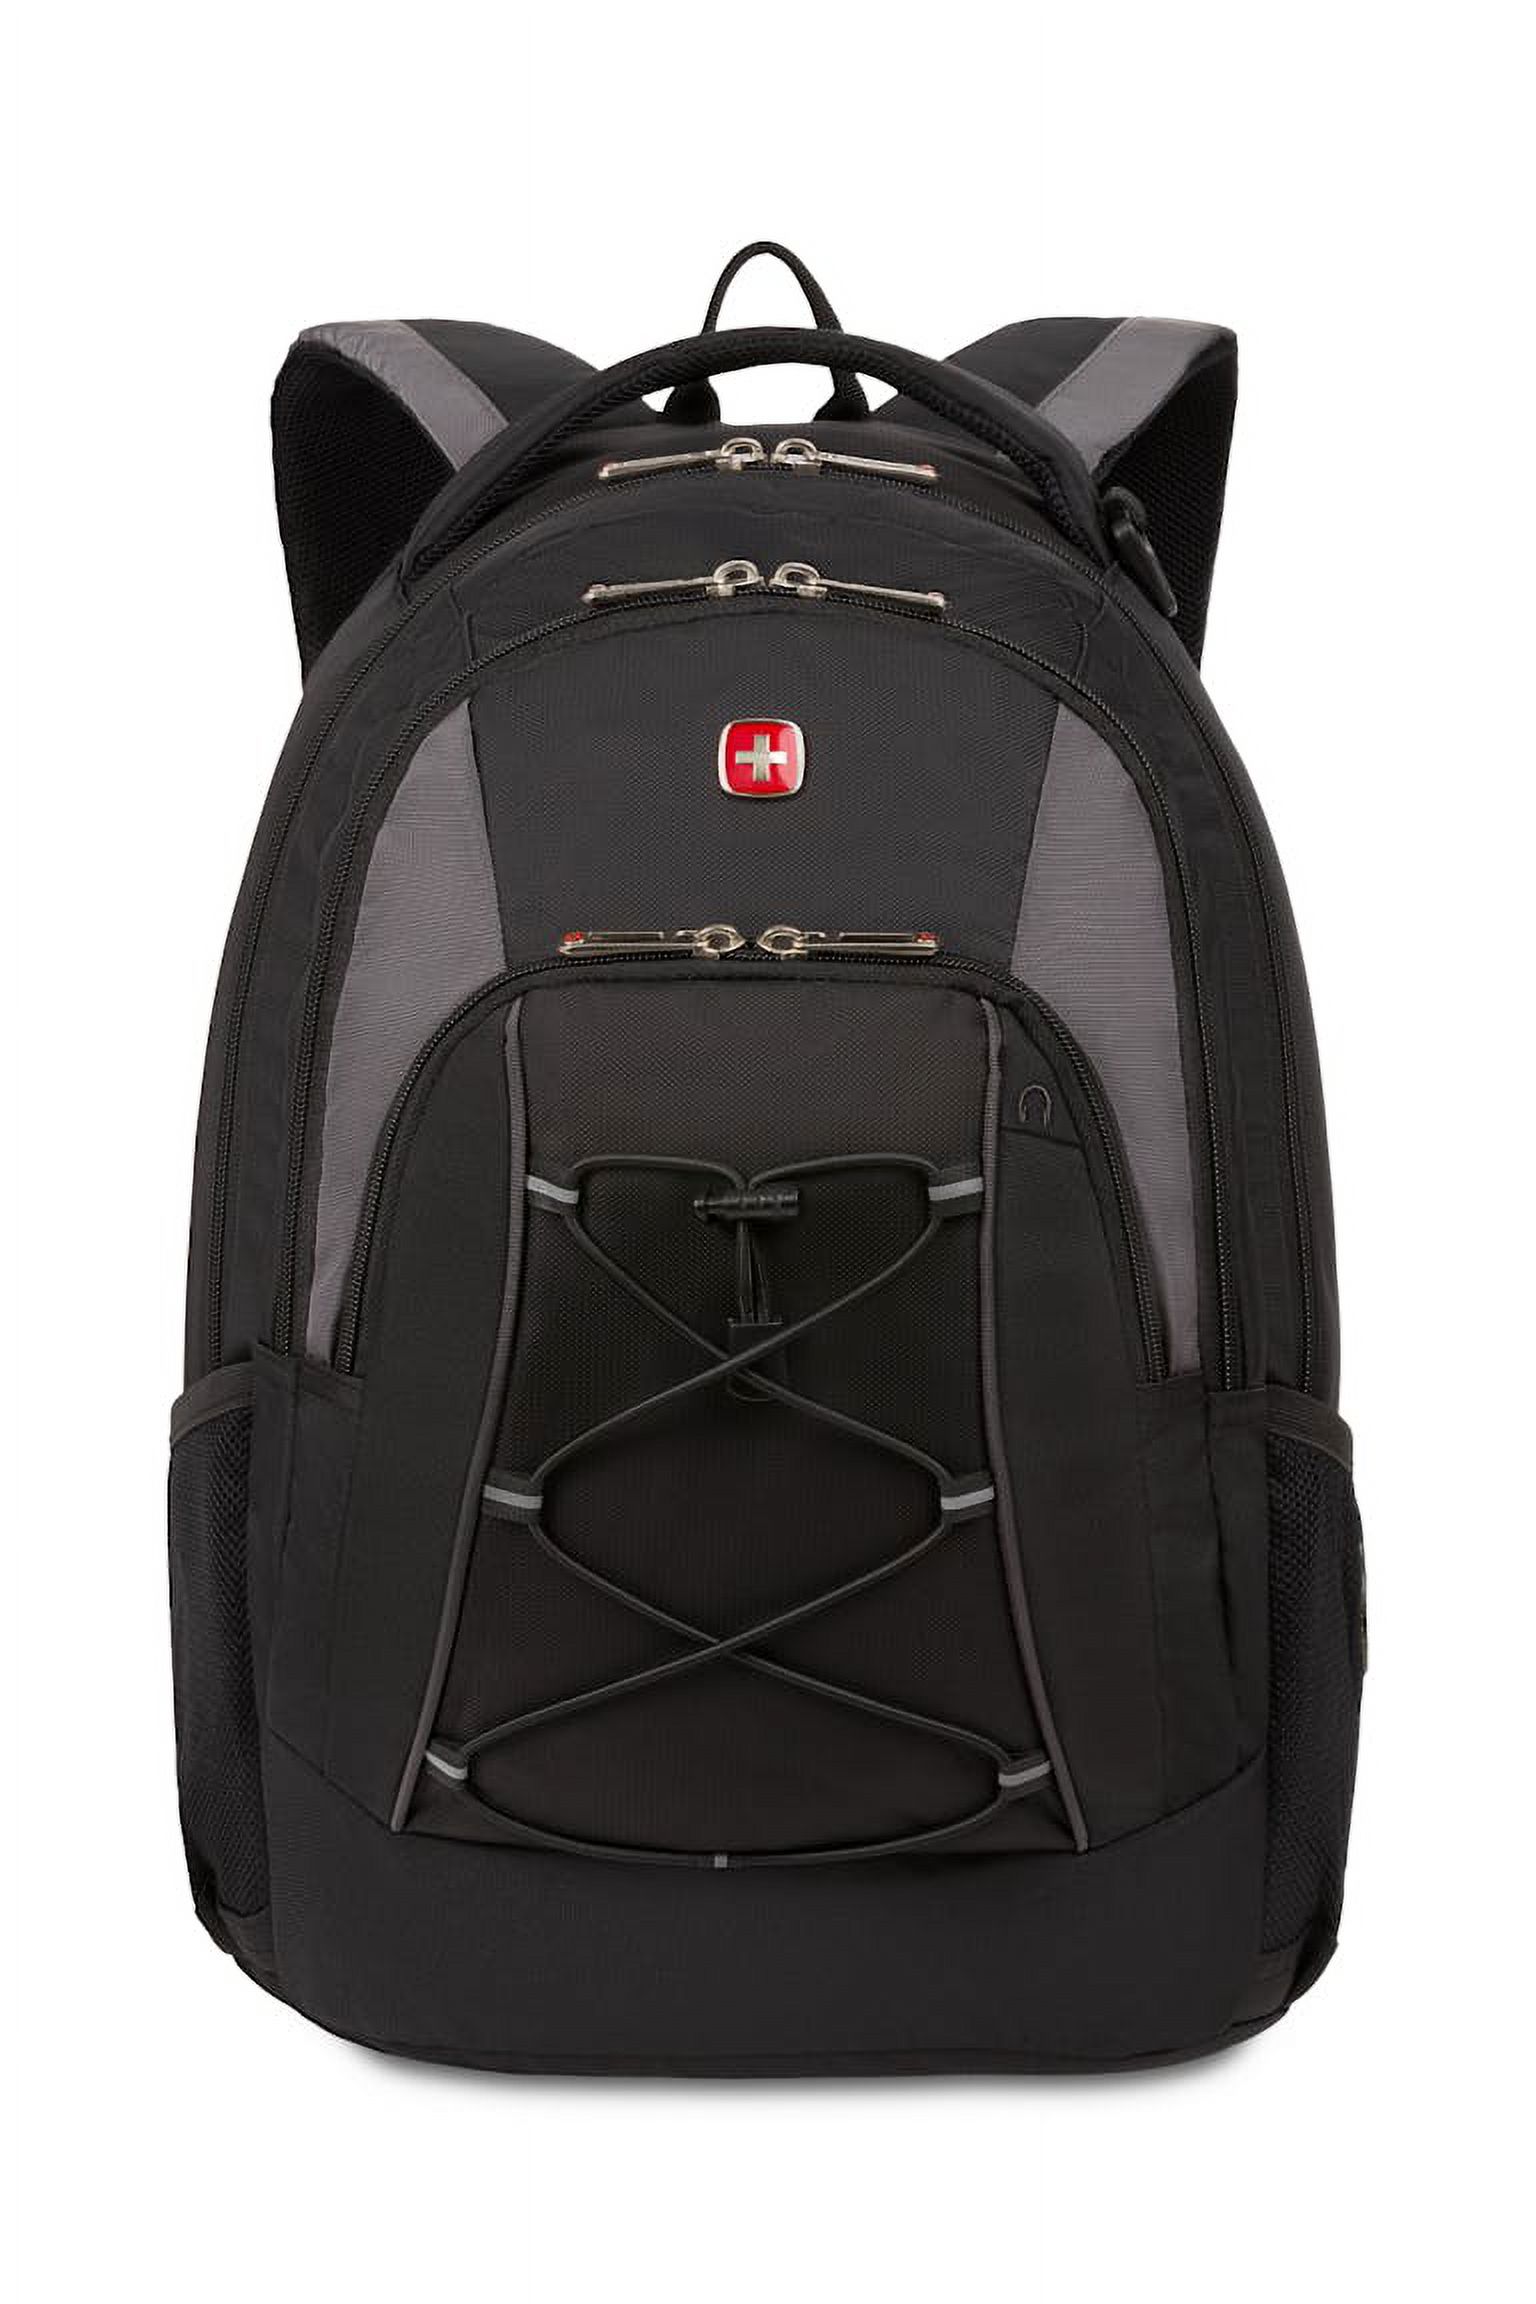 Swissgear 1186 backpack - image 2 of 4